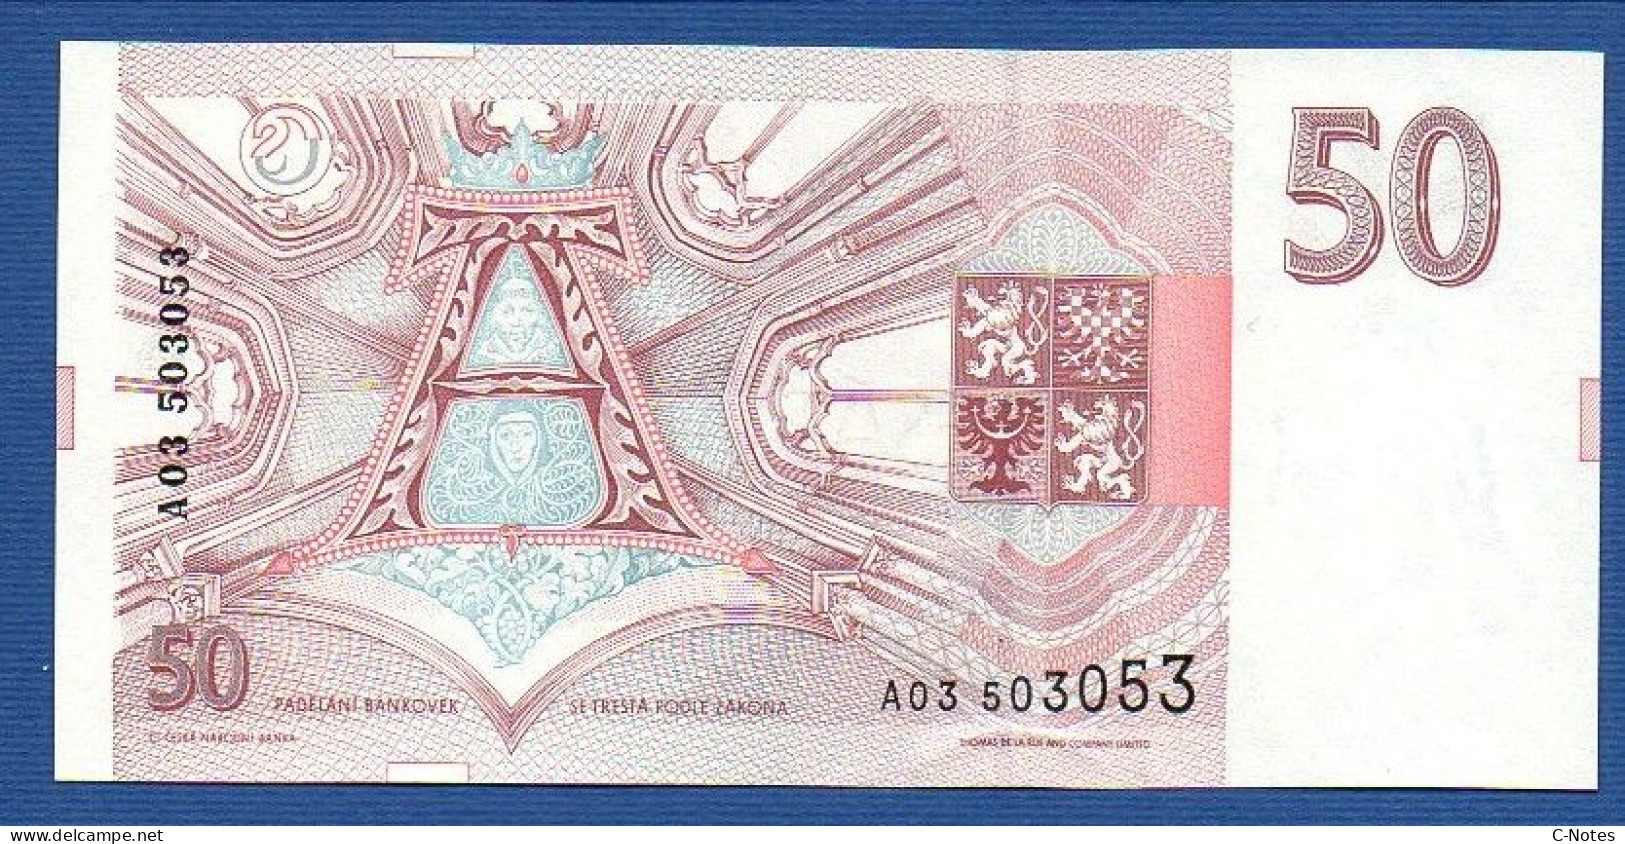 CZECHIA - CZECH Republic - P. 4 – 50 Korun 1993  UNC, S/n A03 503053 - Tsjechië